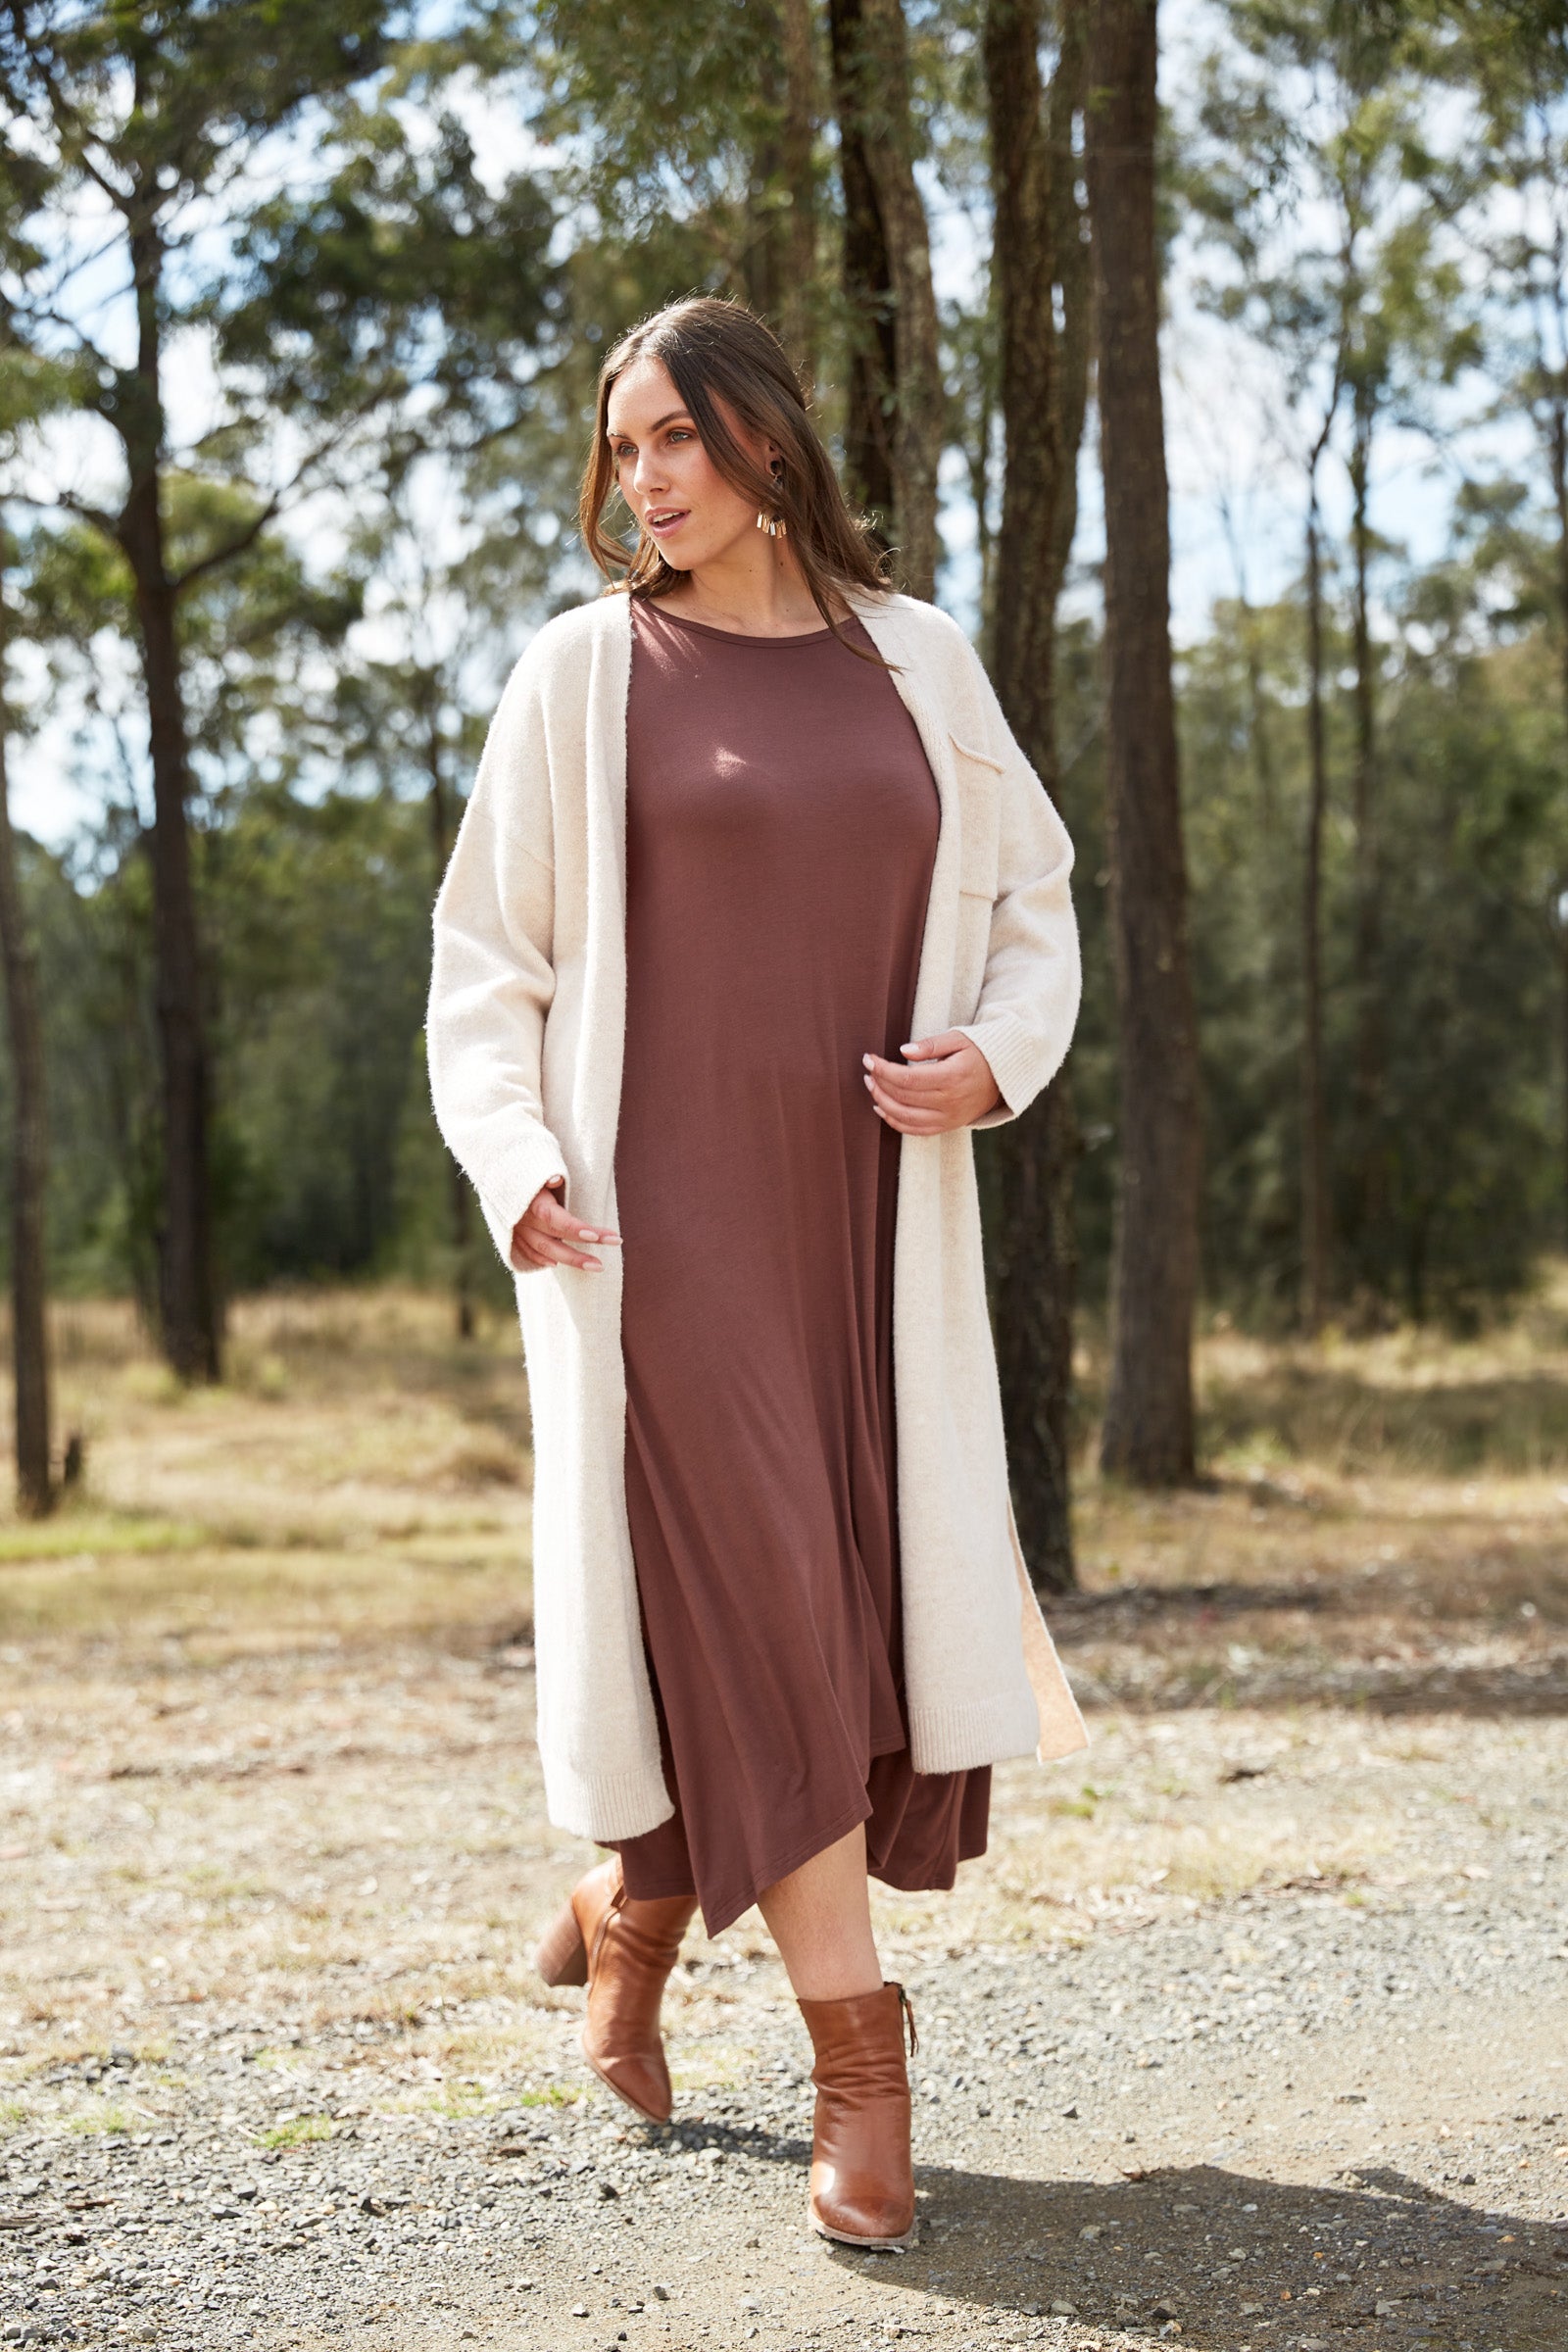 Paarl Longline Cardigan - Oat - eb&ive Clothing - Knit Cardigan Long One Size